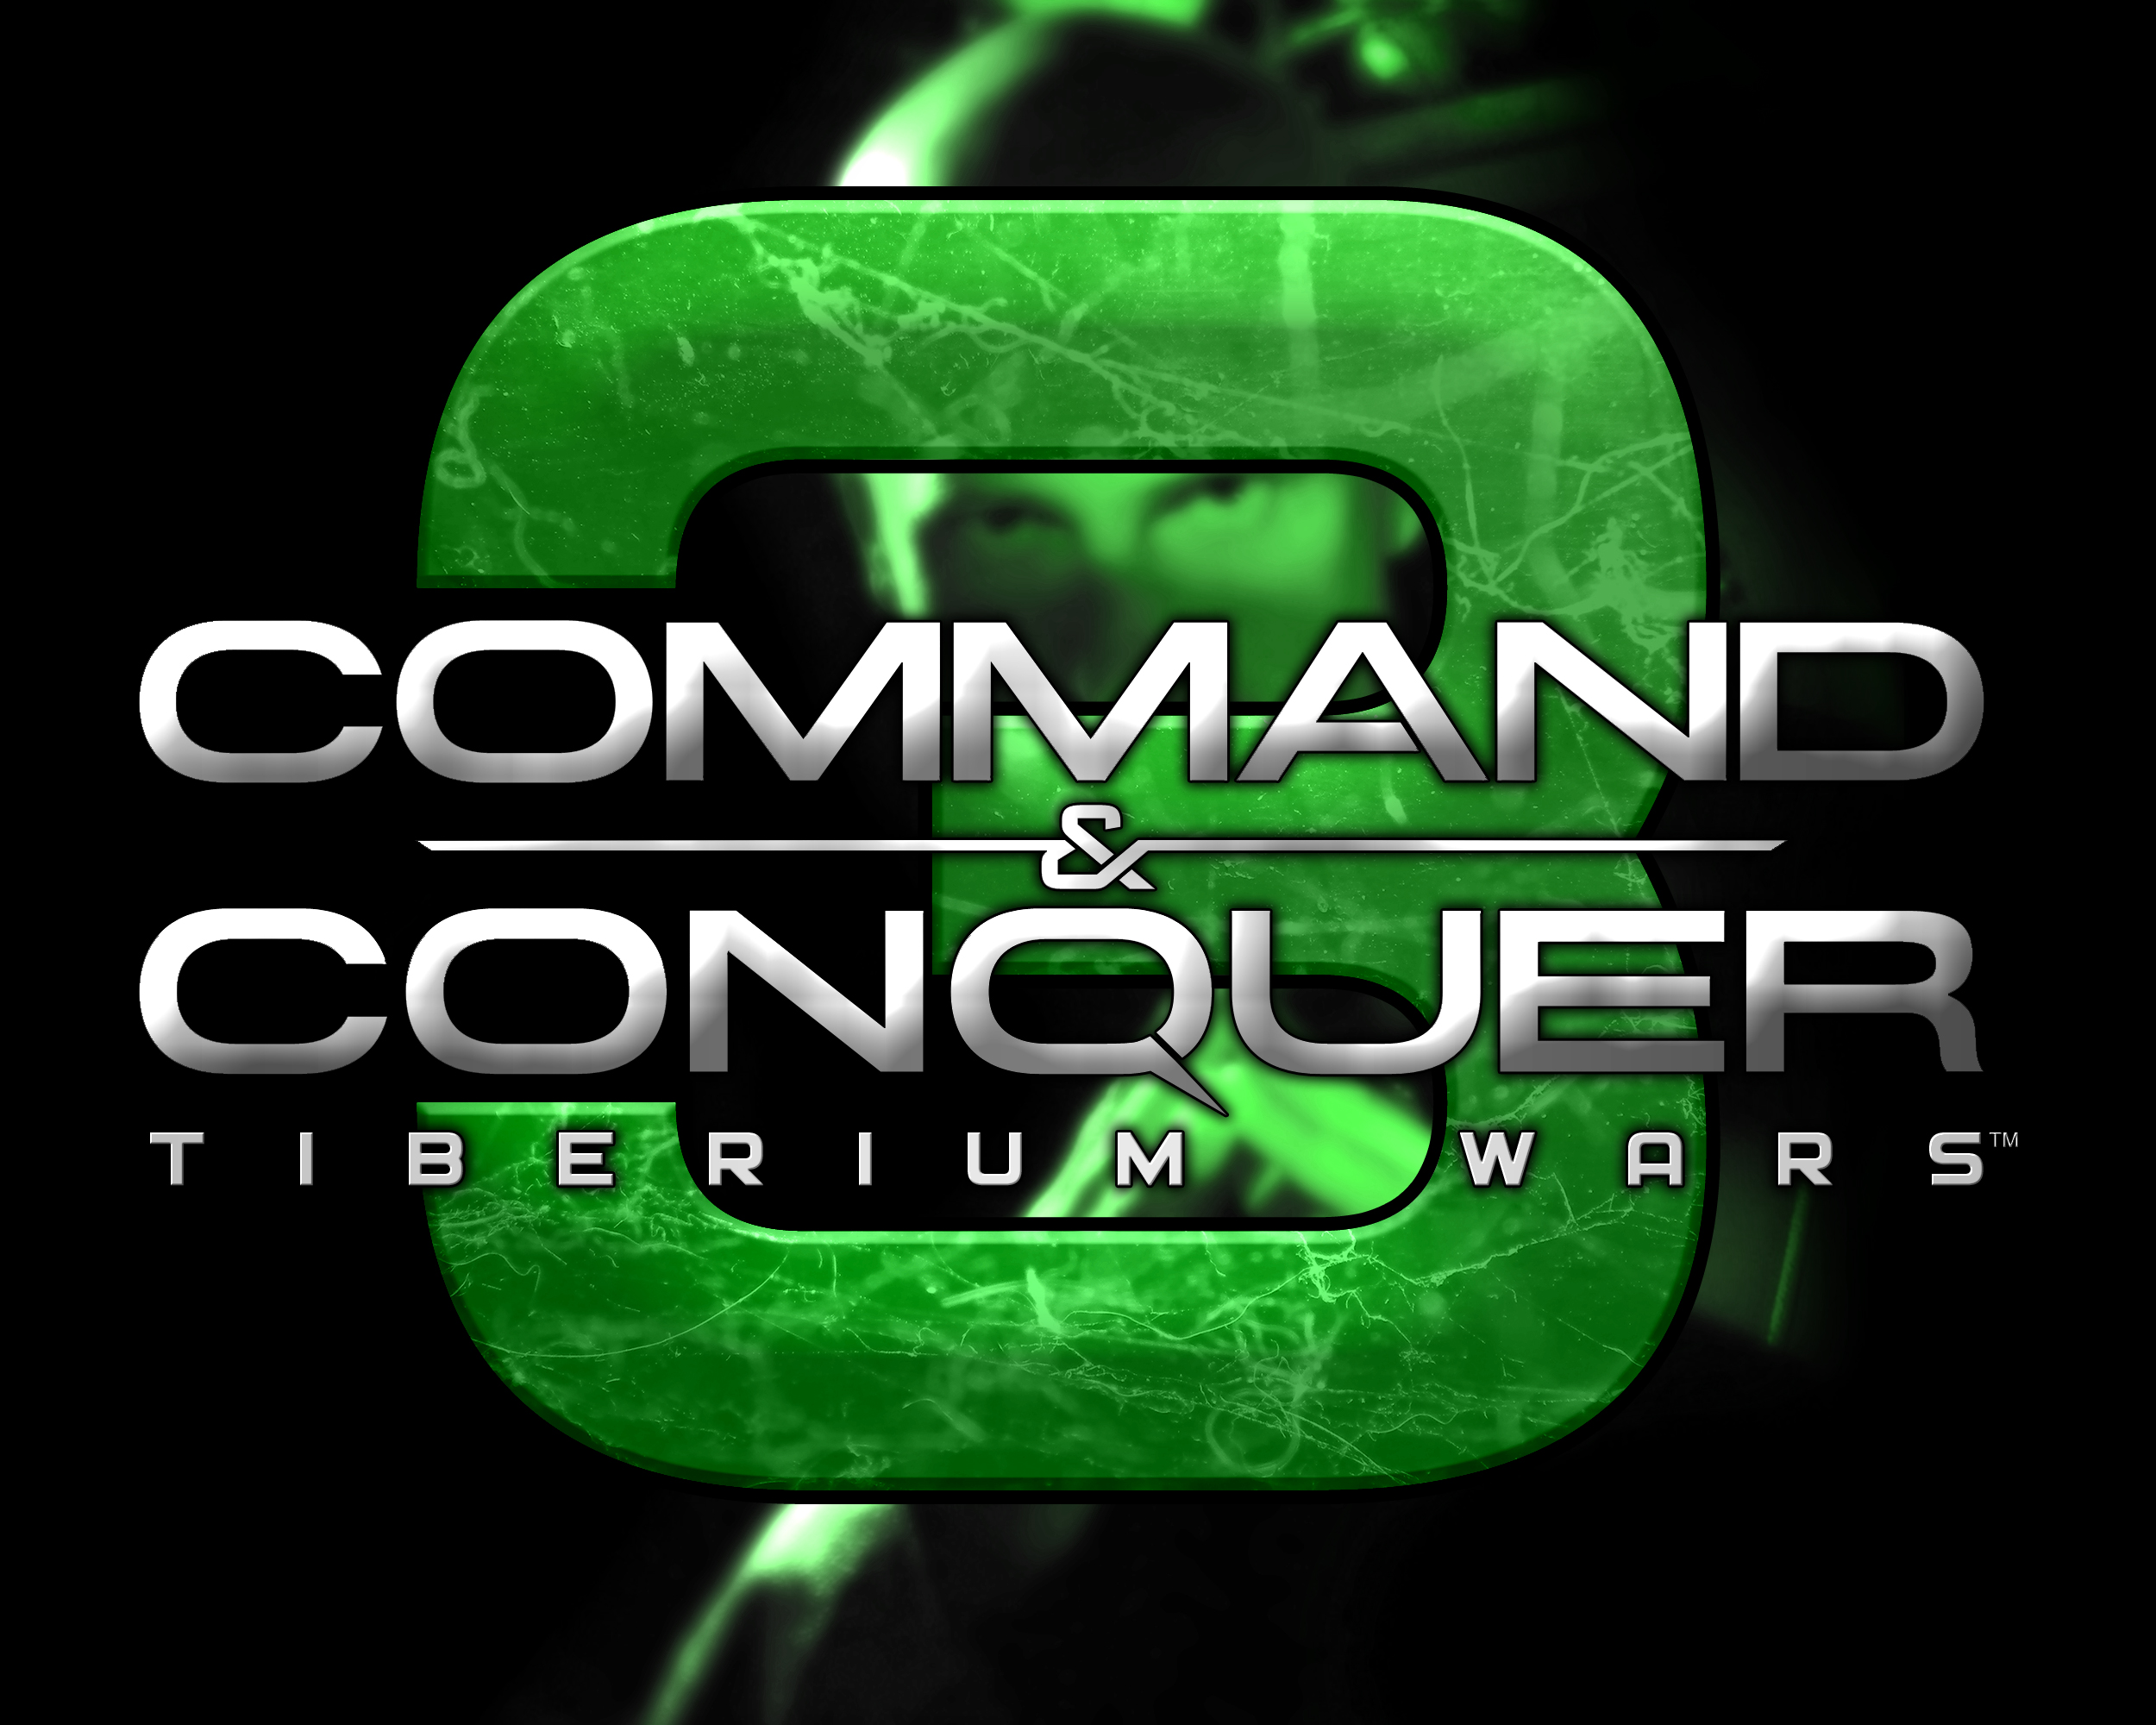 Command And Conquer 3 Tiberium Wars | НОД | ТУРНИР БАШНЯ